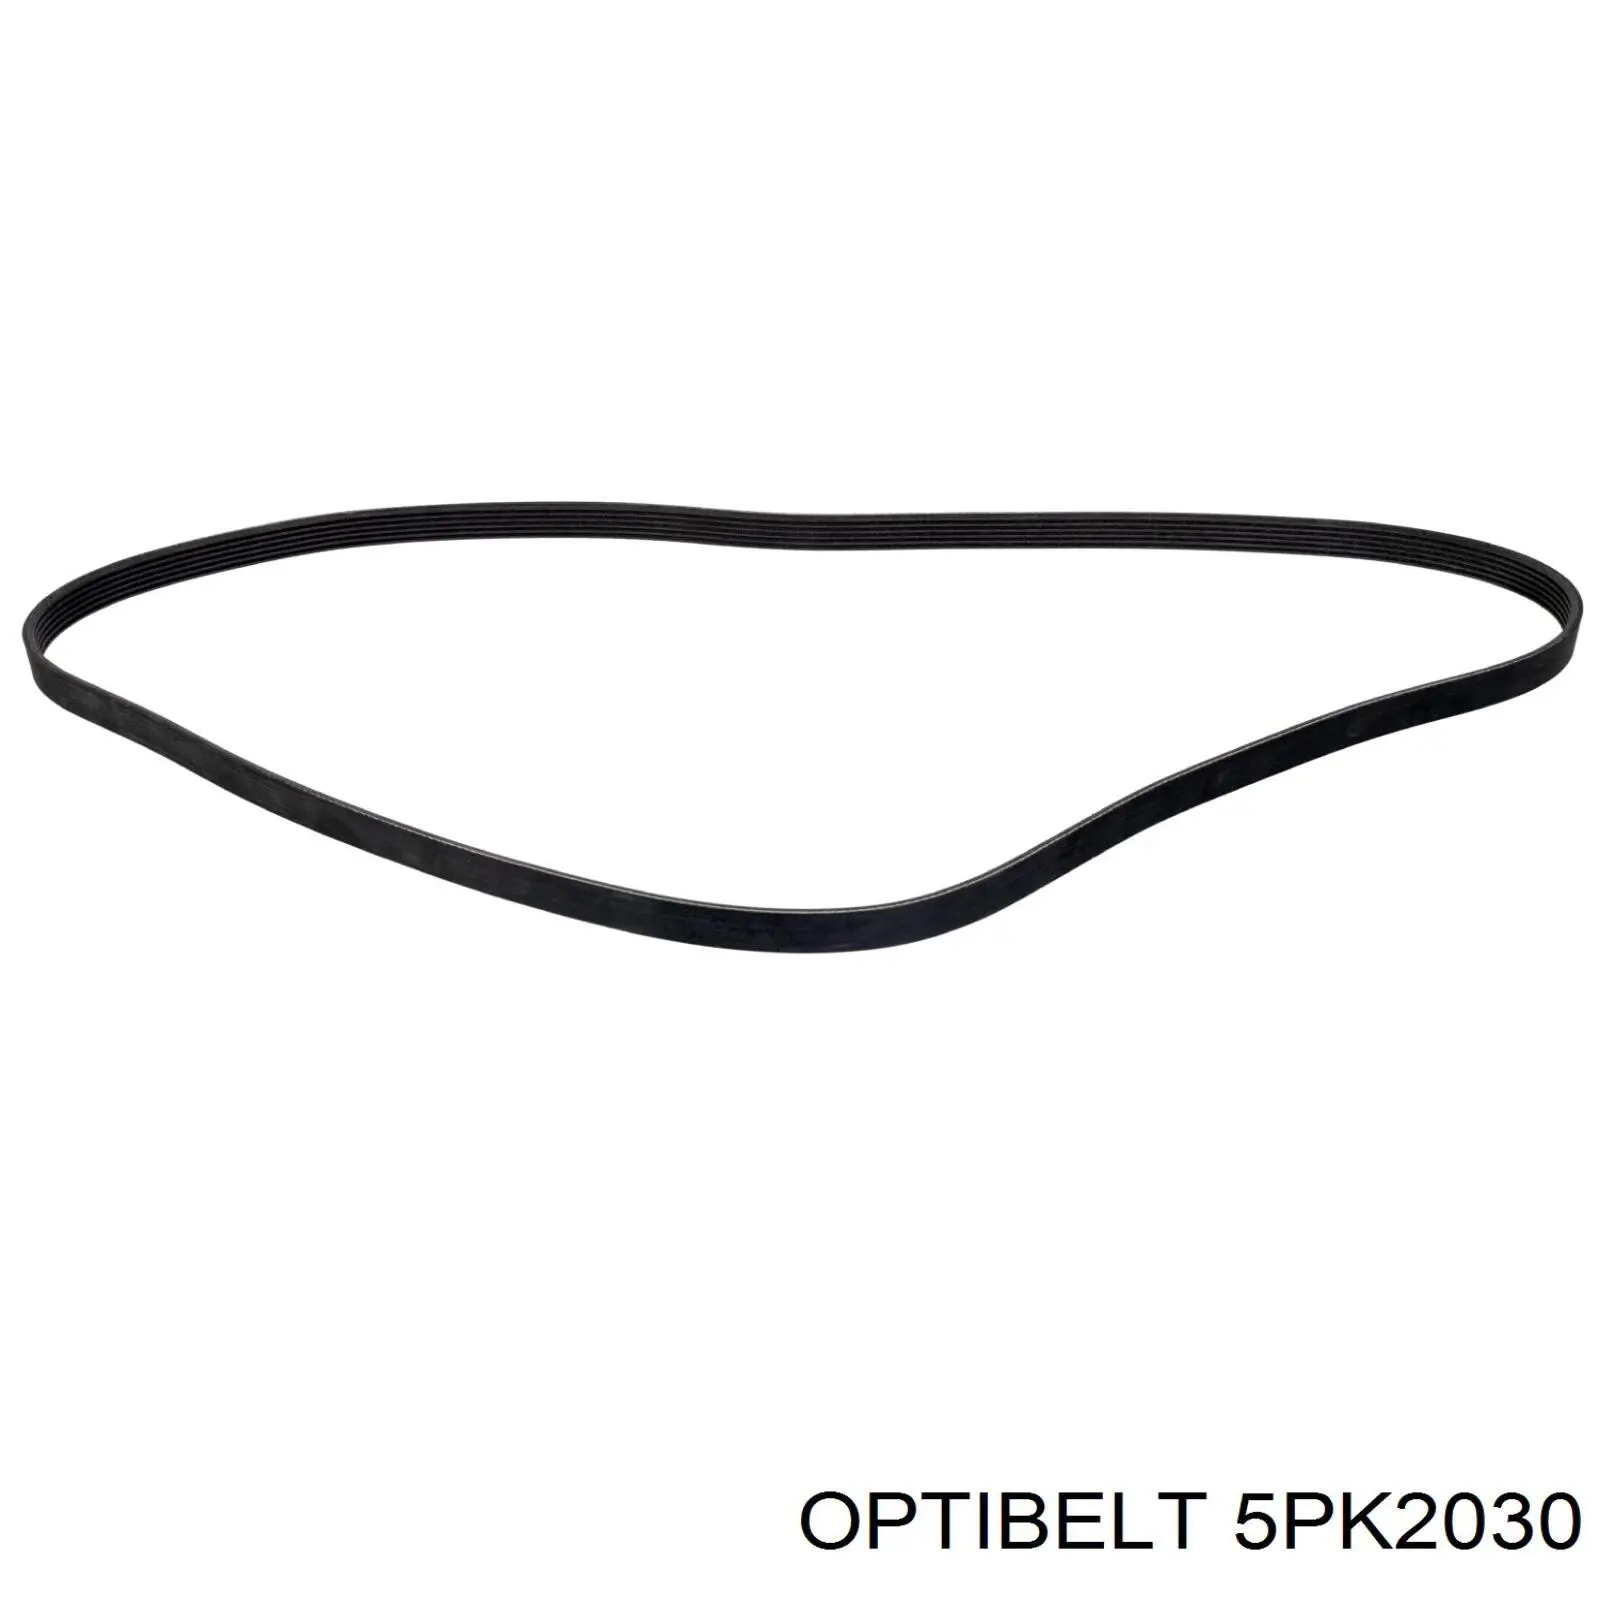 5PK2030 Optibelt correa trapezoidal